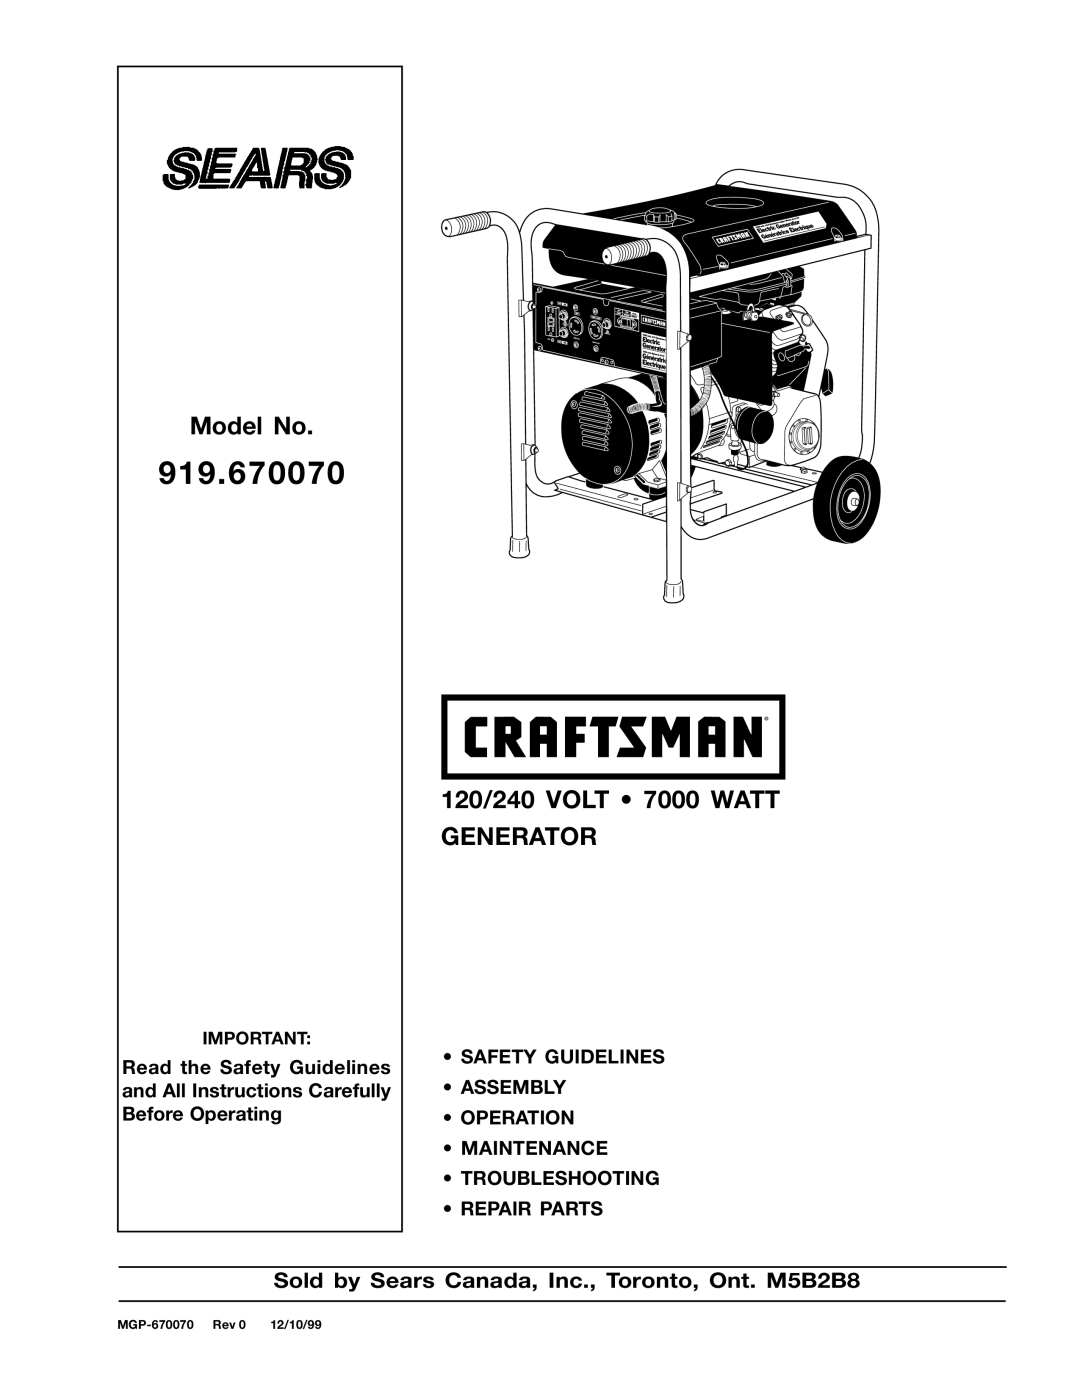 Craftsman 919.670070, MGP-670070 owner manual Owners Manual, Generator, Sold by Sears Canada, Inc., Toronto, Ont. M5B2B8 